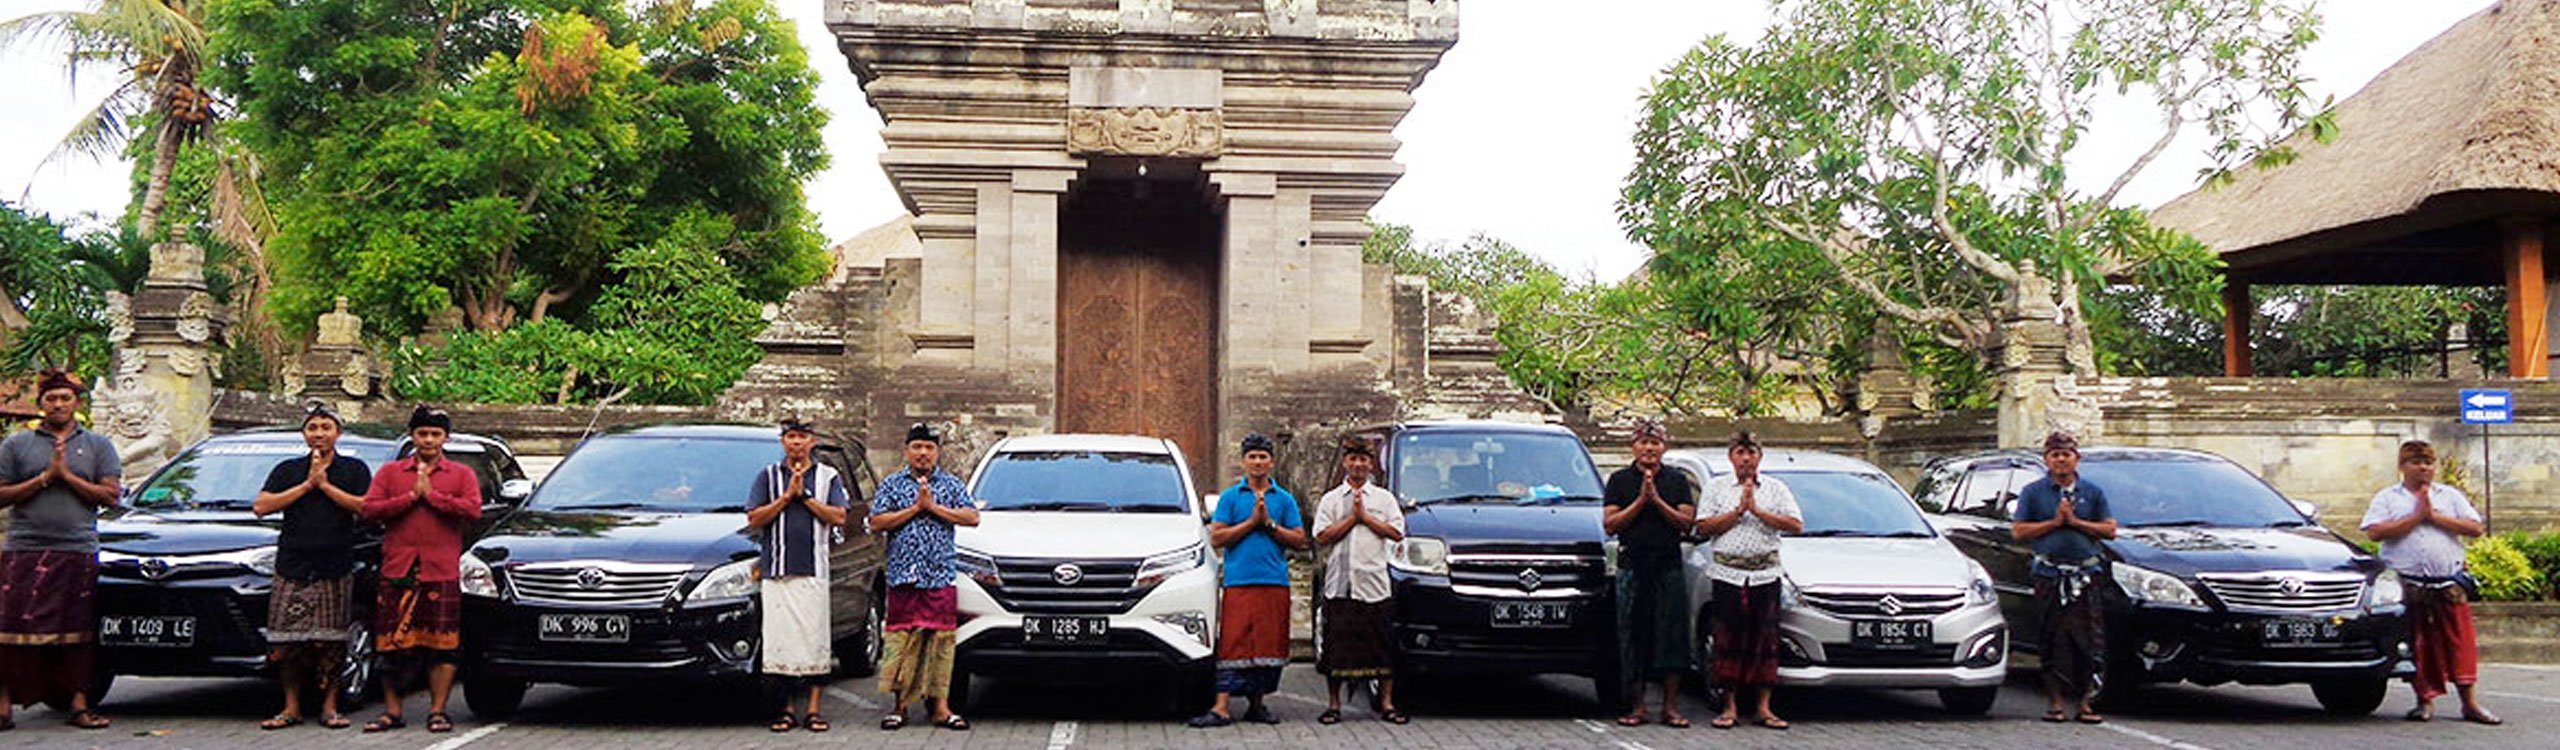 Bali Car Hire With Driver | balihonestdriver.com | Bali Local Tour Experts